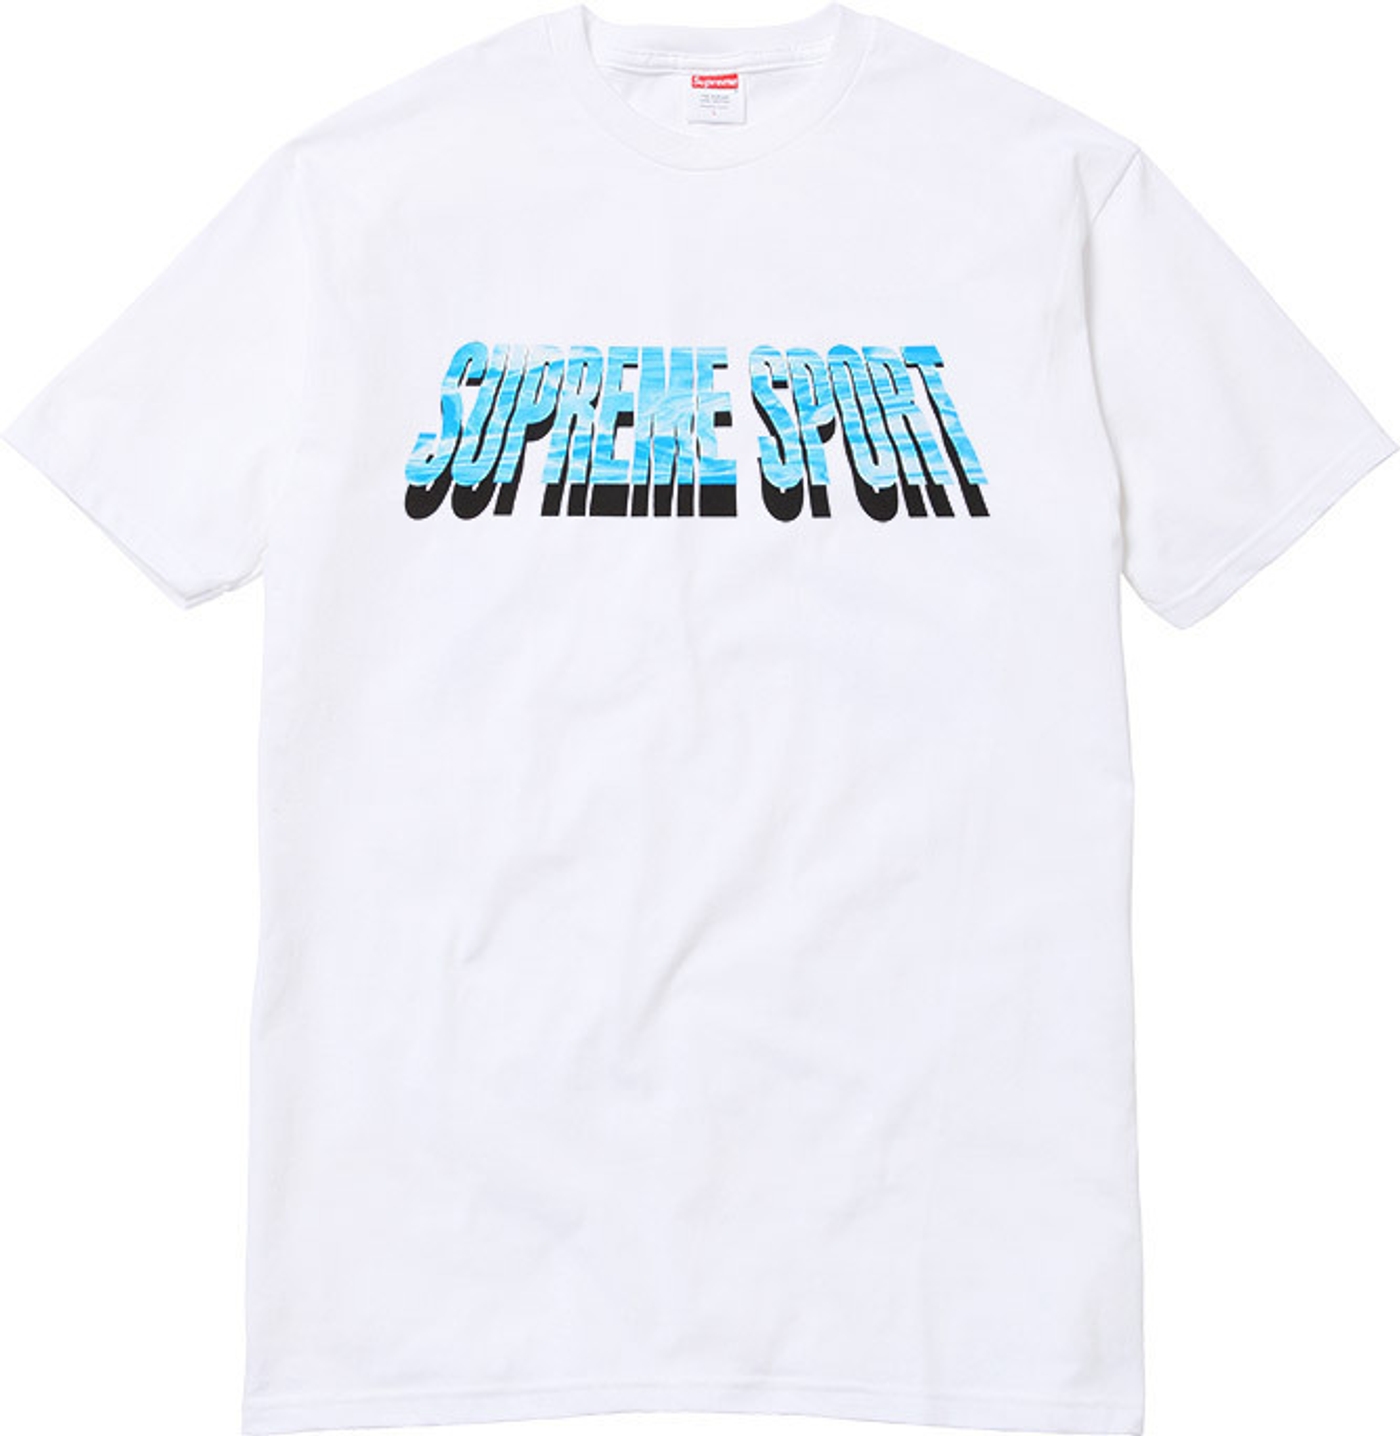 All cotton classic Supreme t-shirt. (21/26)